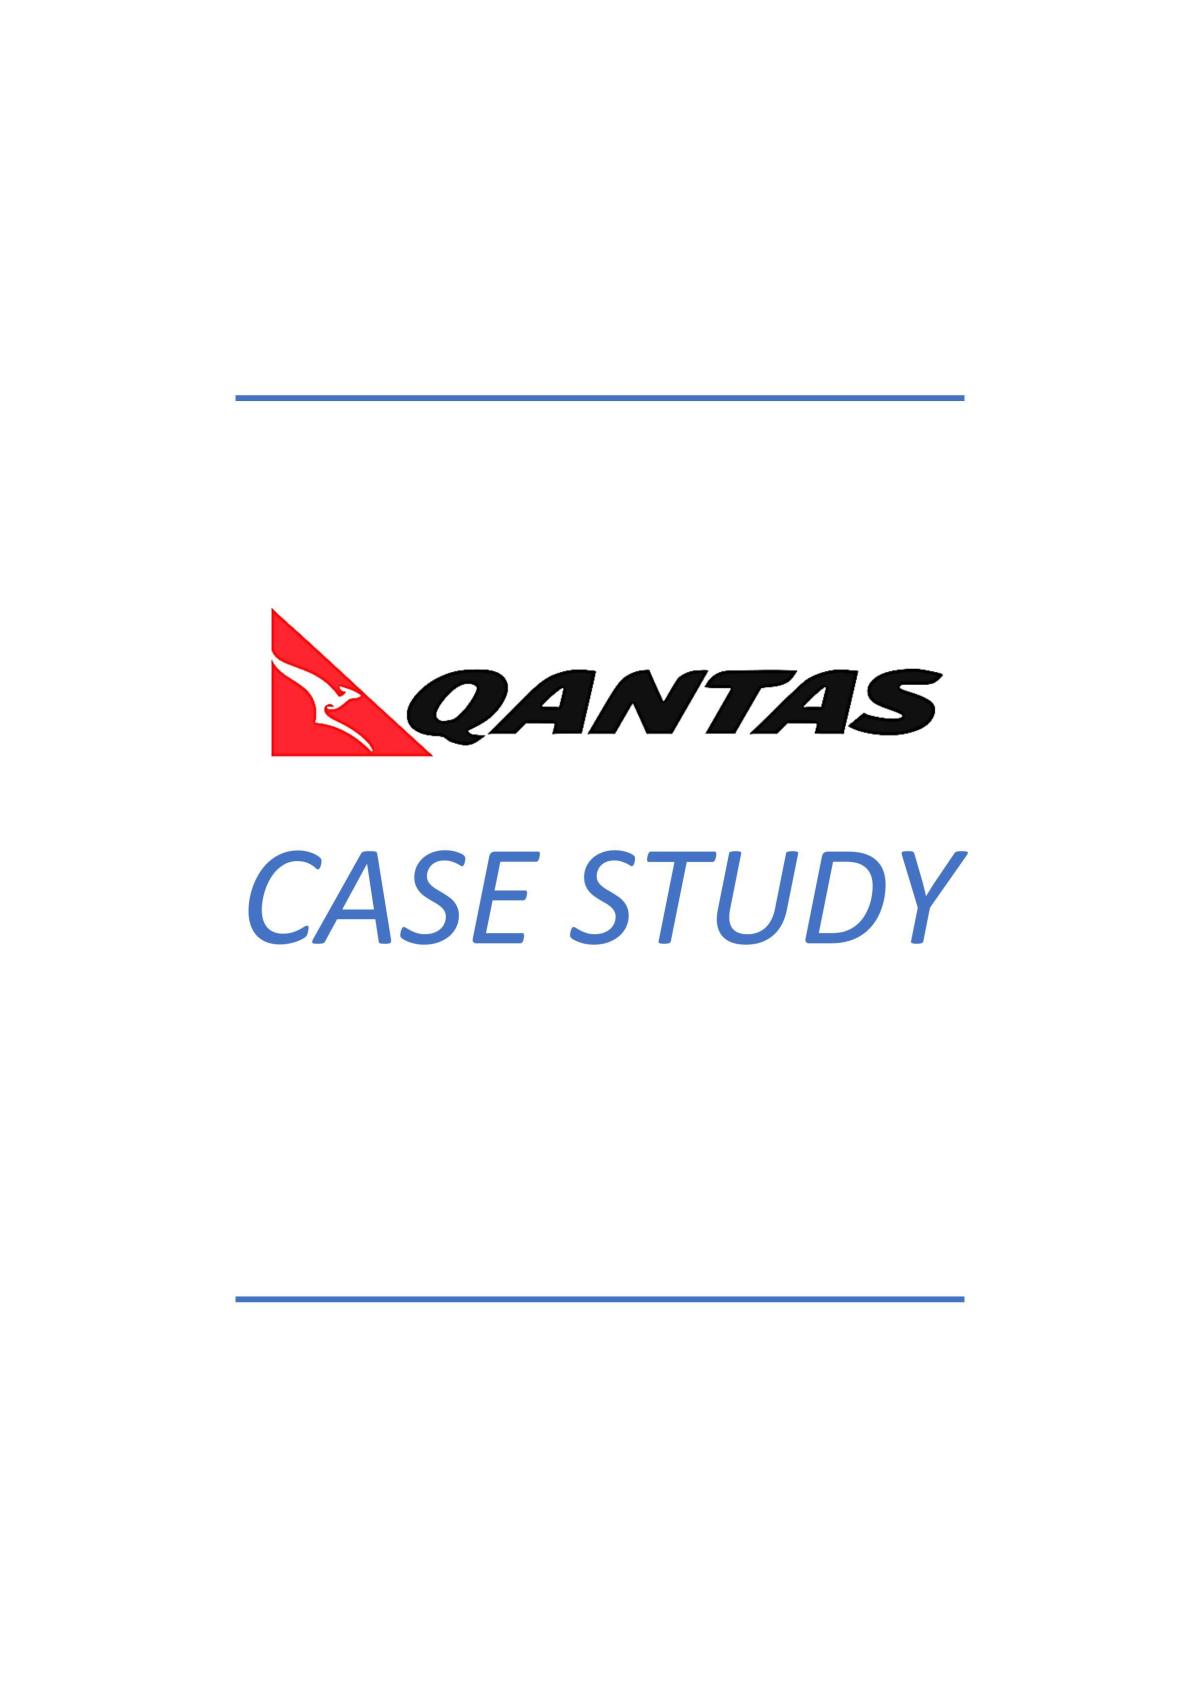 qantas case study business studies marketing